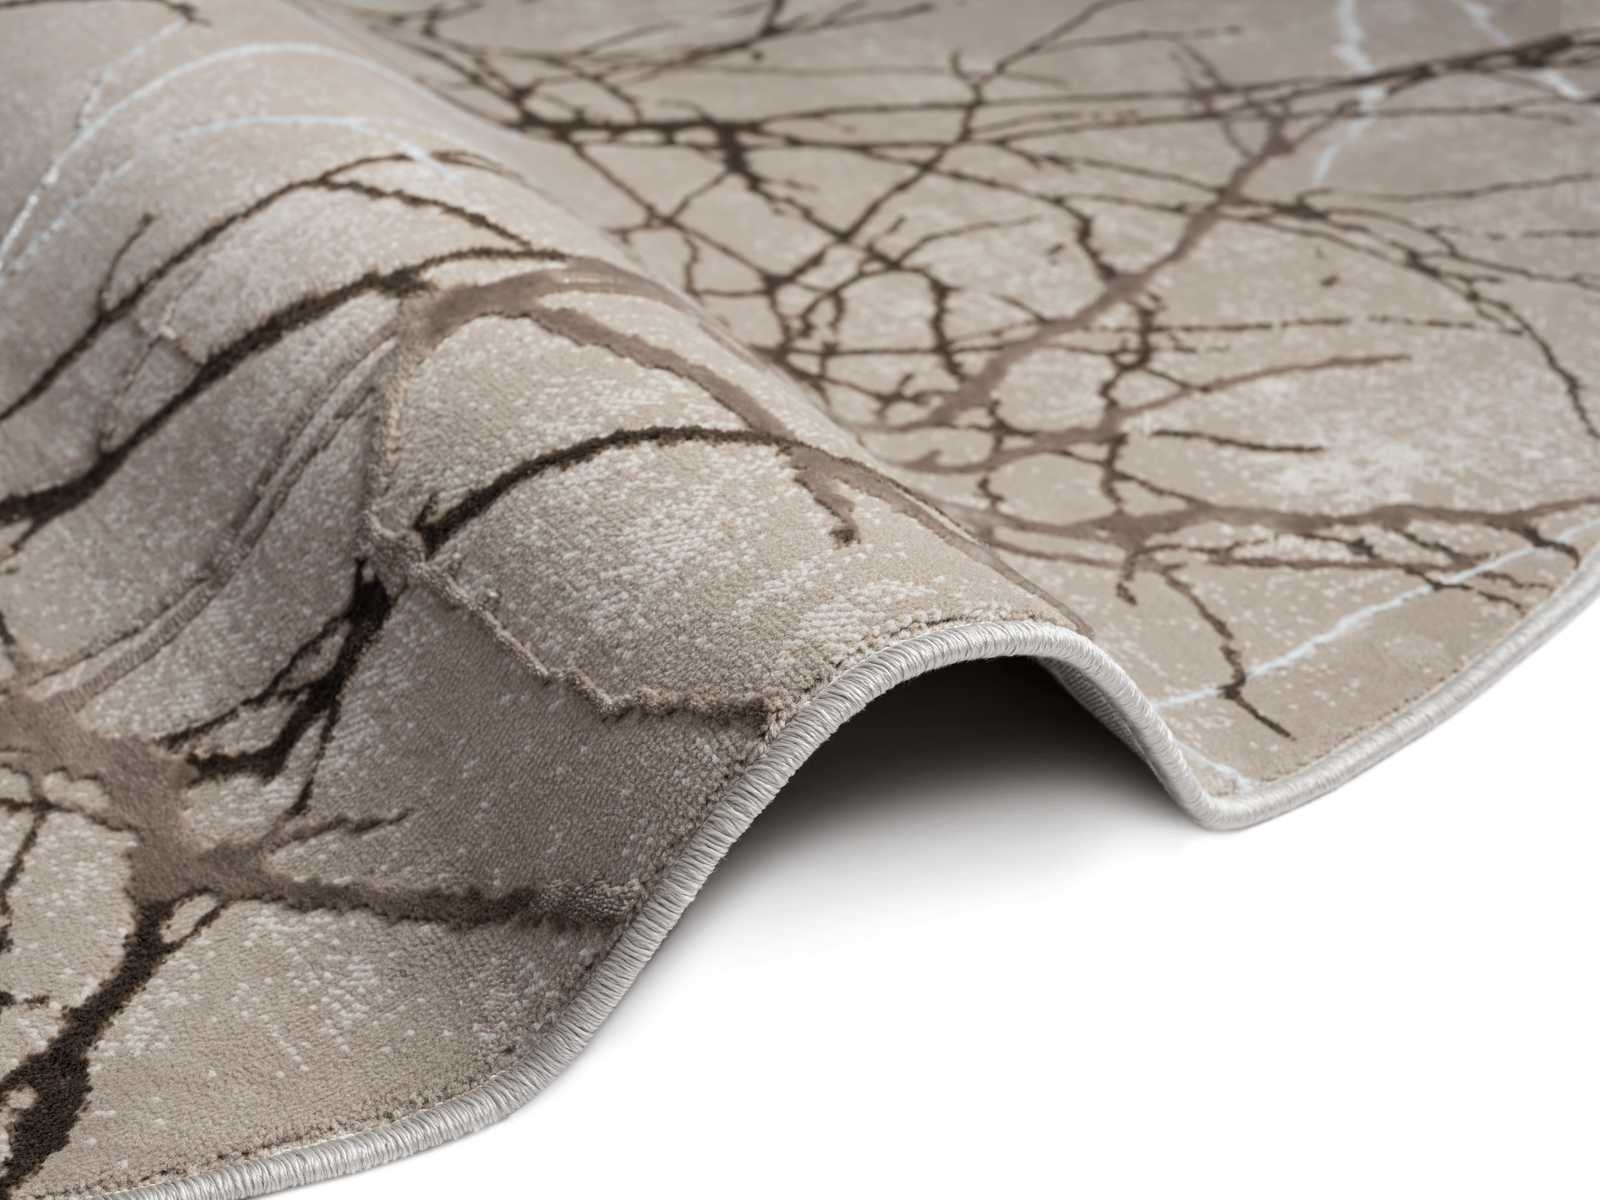             Pile carpet in soft beige - 170 x 120 cm
        